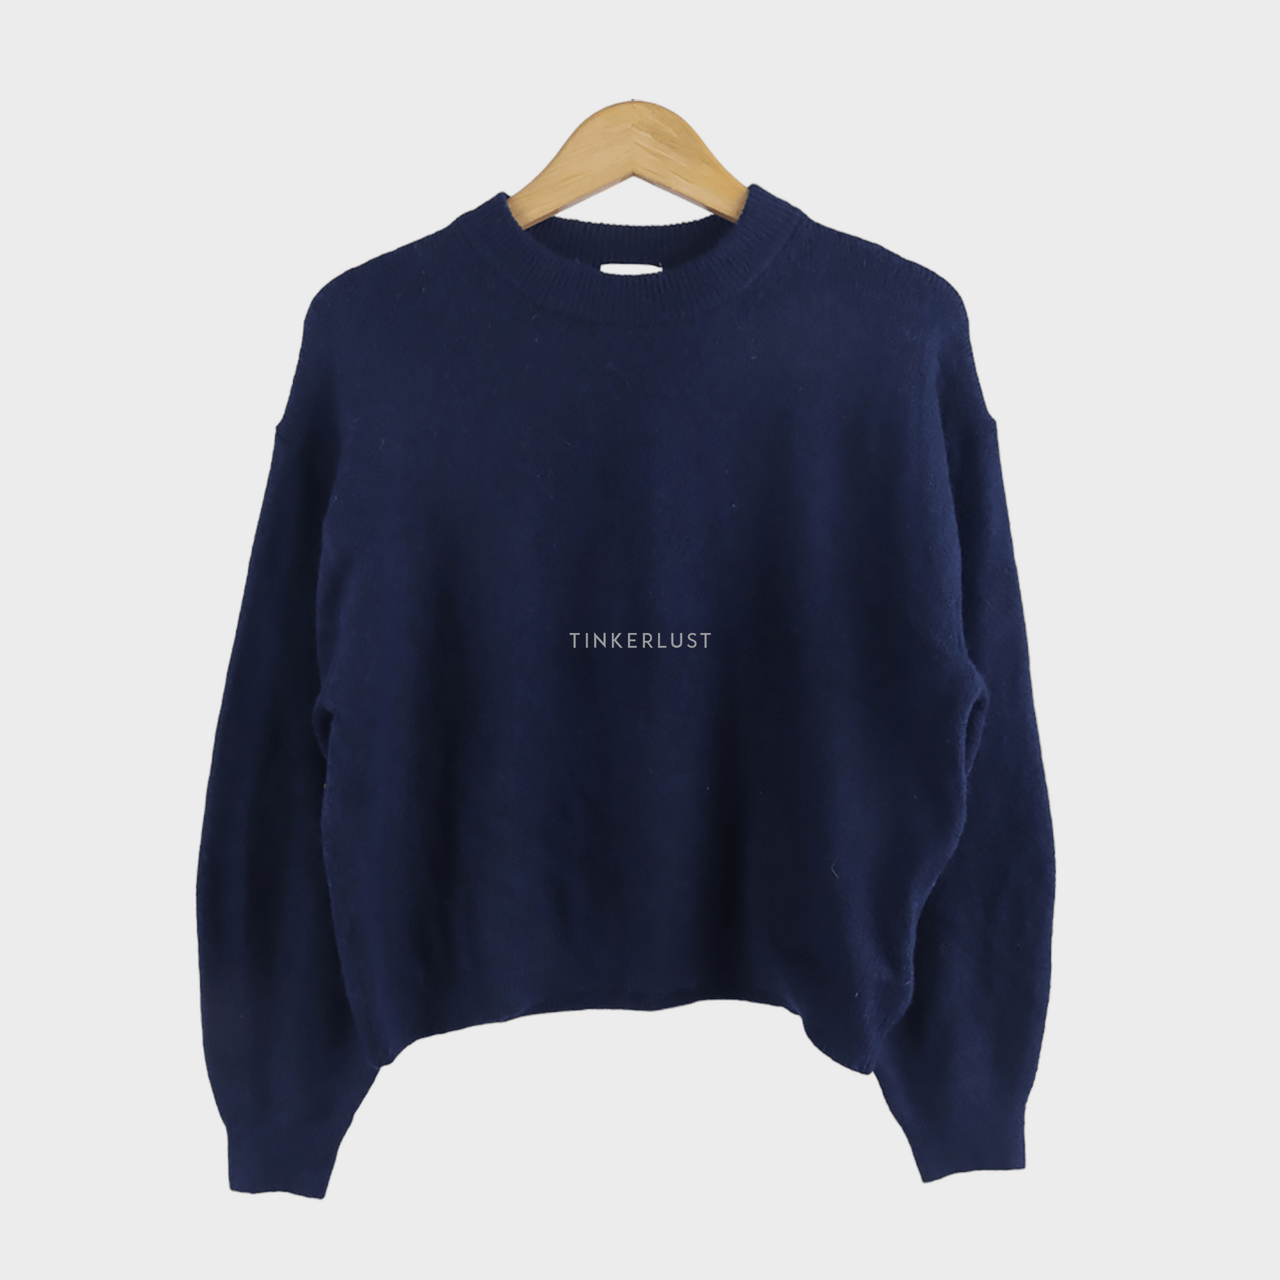 H&M Navy Sweater